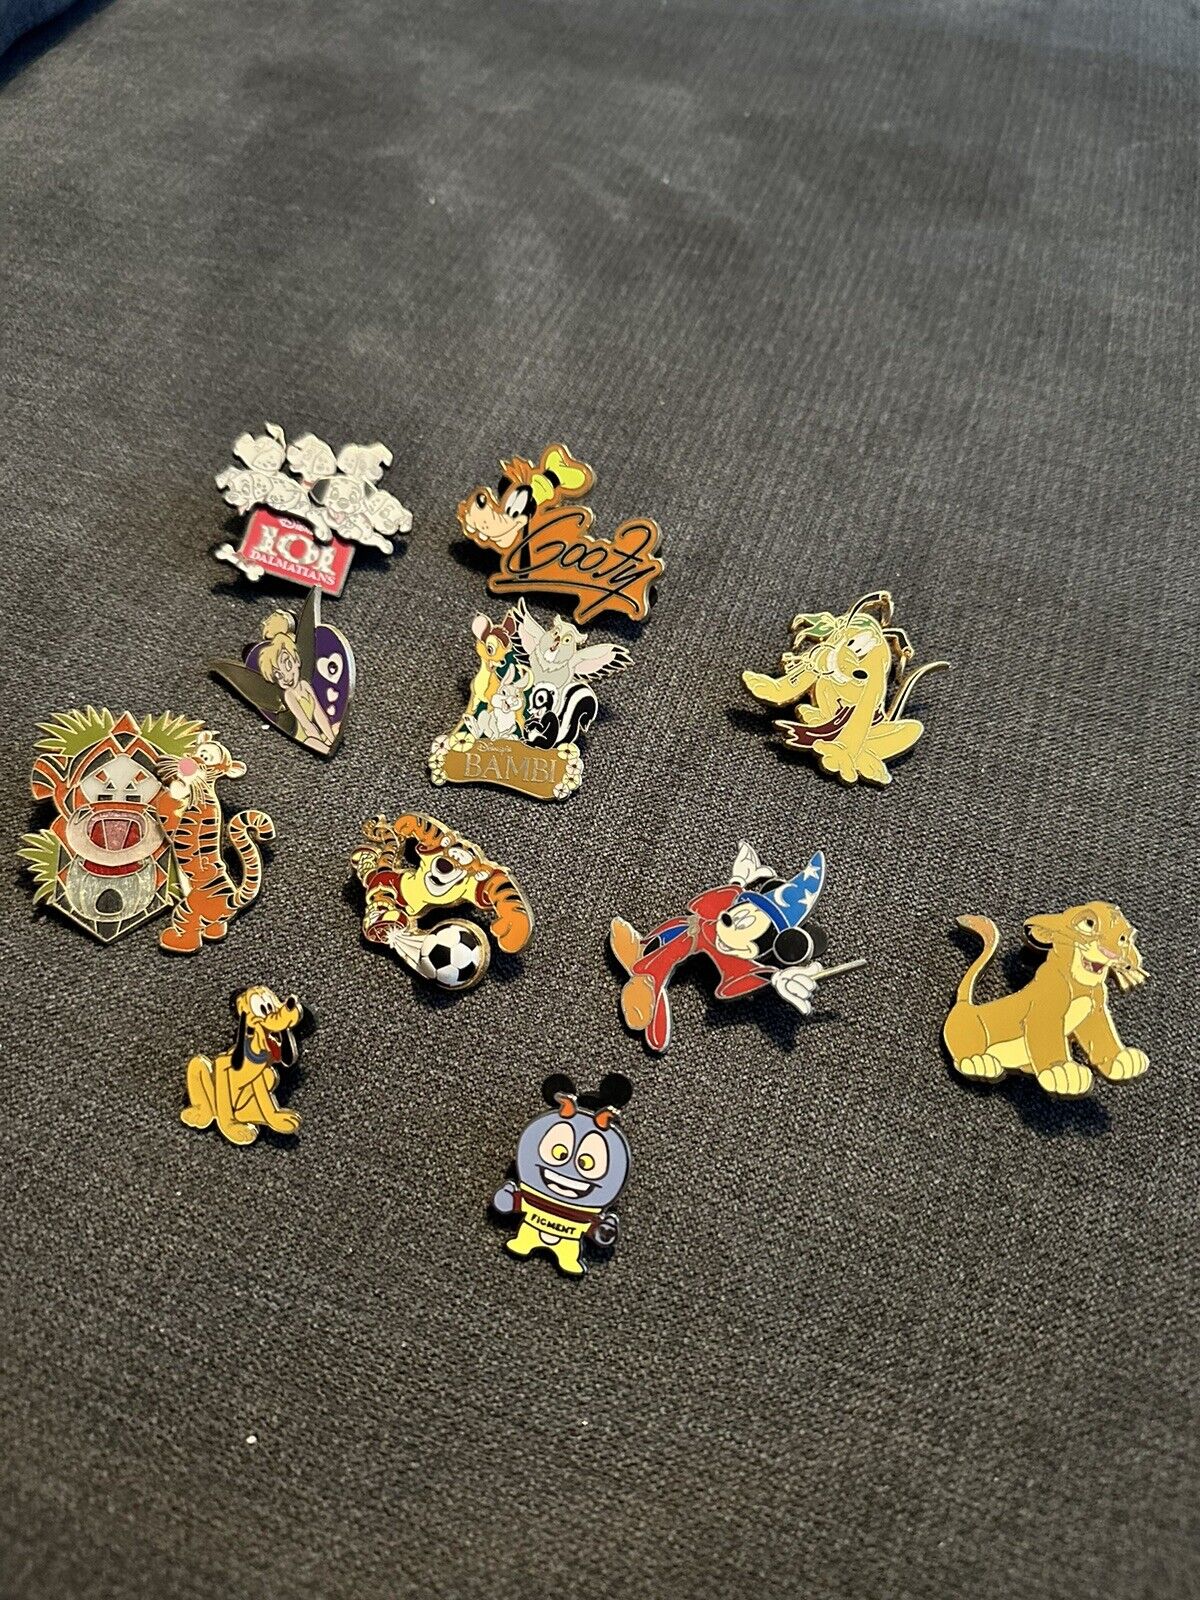 Official Disney Trading Pins, Job Lot. 11 Trading Pins